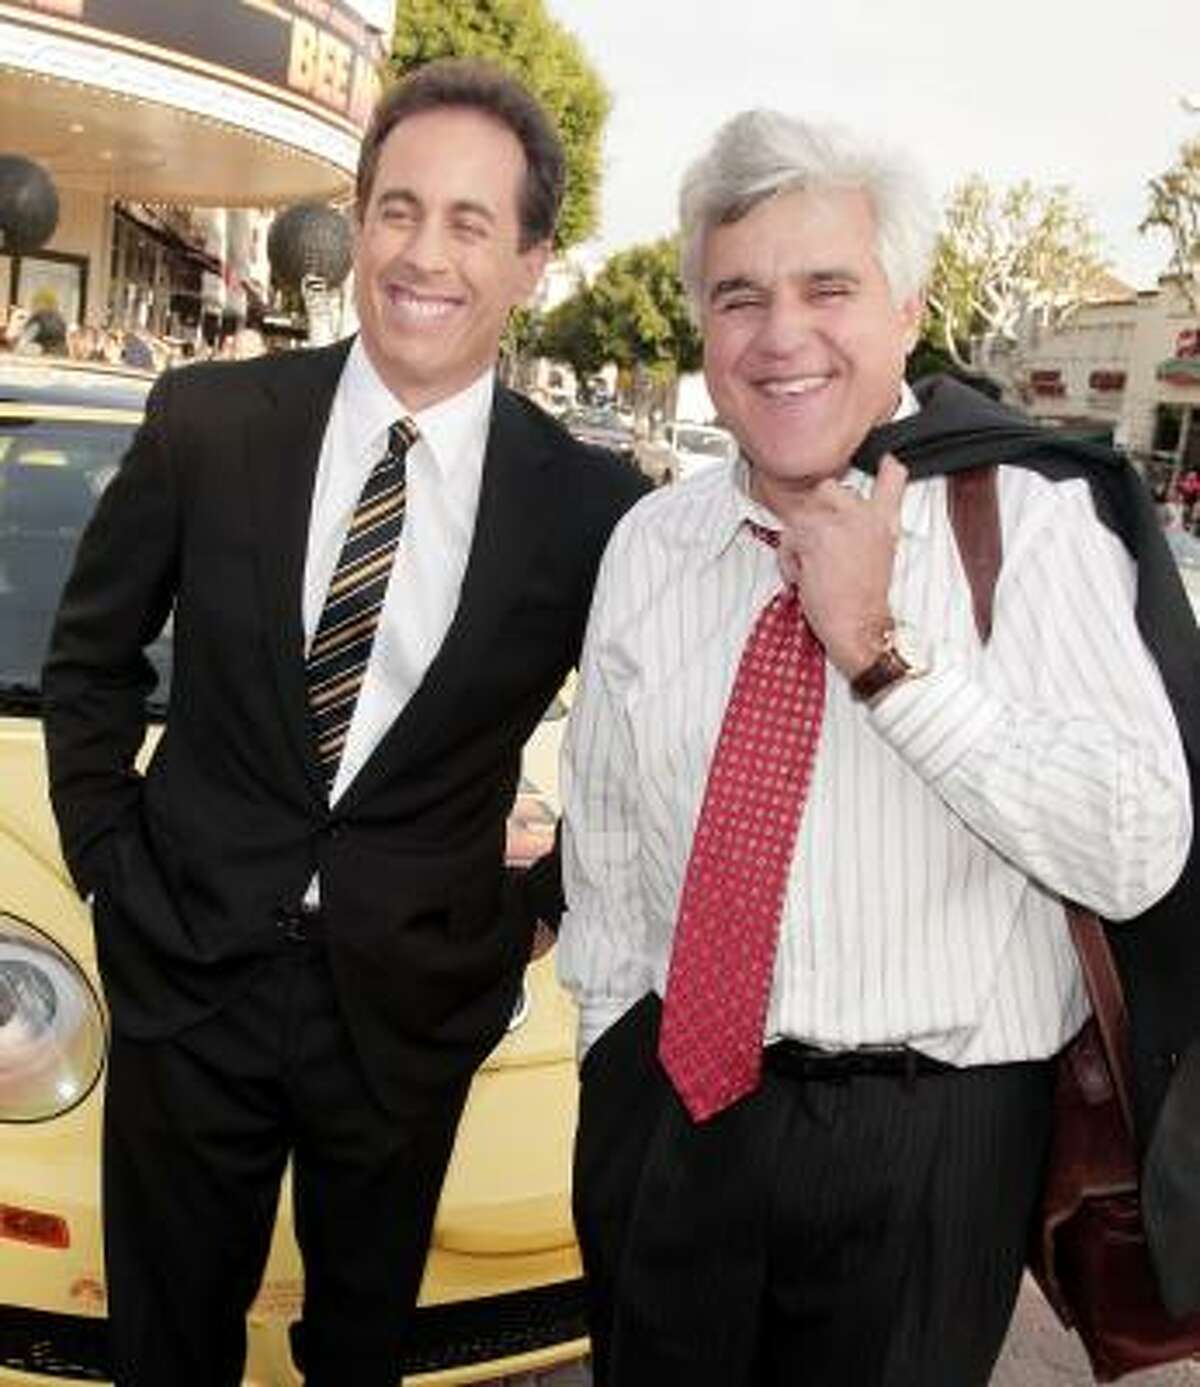 Jerry Seinfeld, left, and Jay Leno